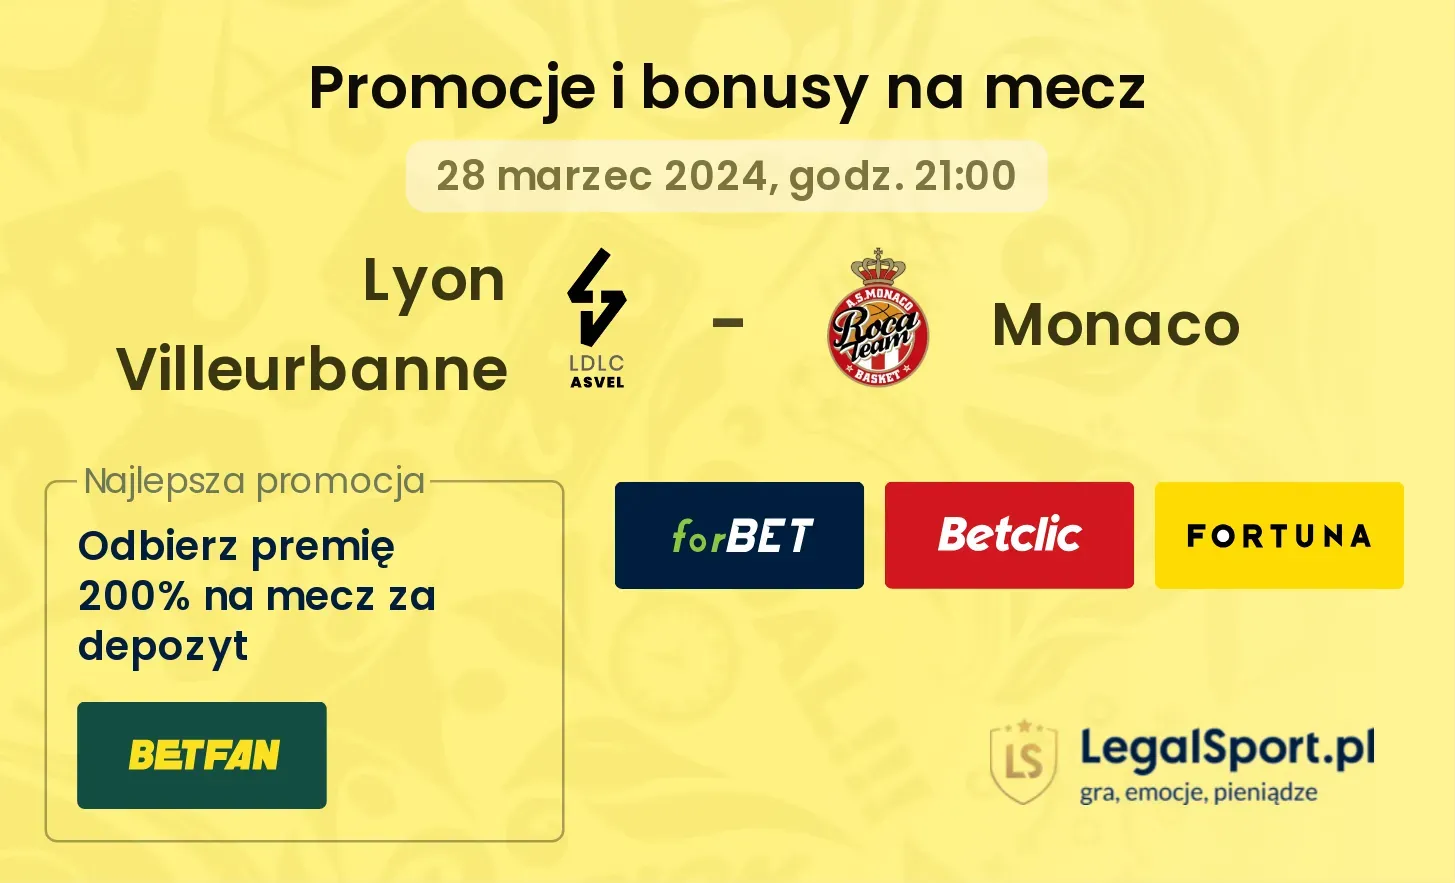 Lyon Villeurbanne - Monaco promocje bonusy na mecz